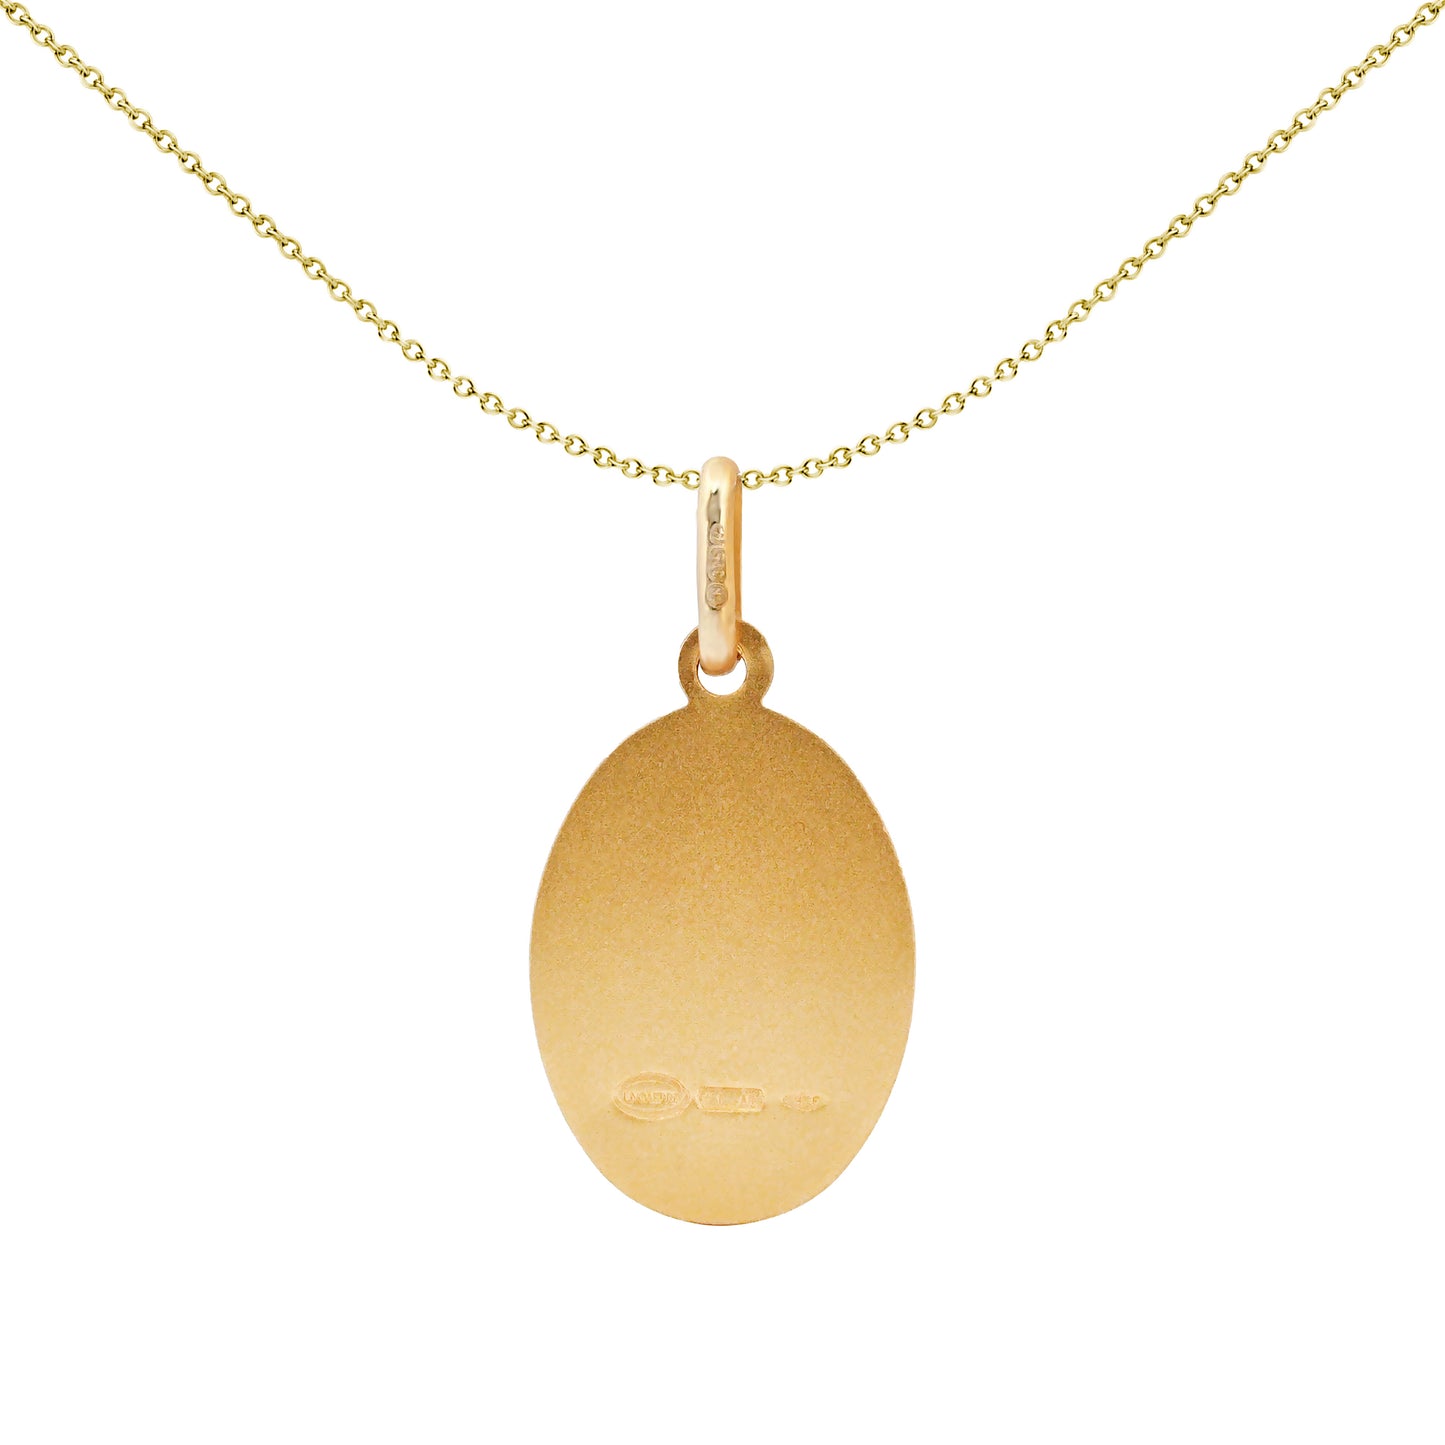 Solid 9ct Gold  Matte Oval St Christopher Medallion Pendant - JPM011